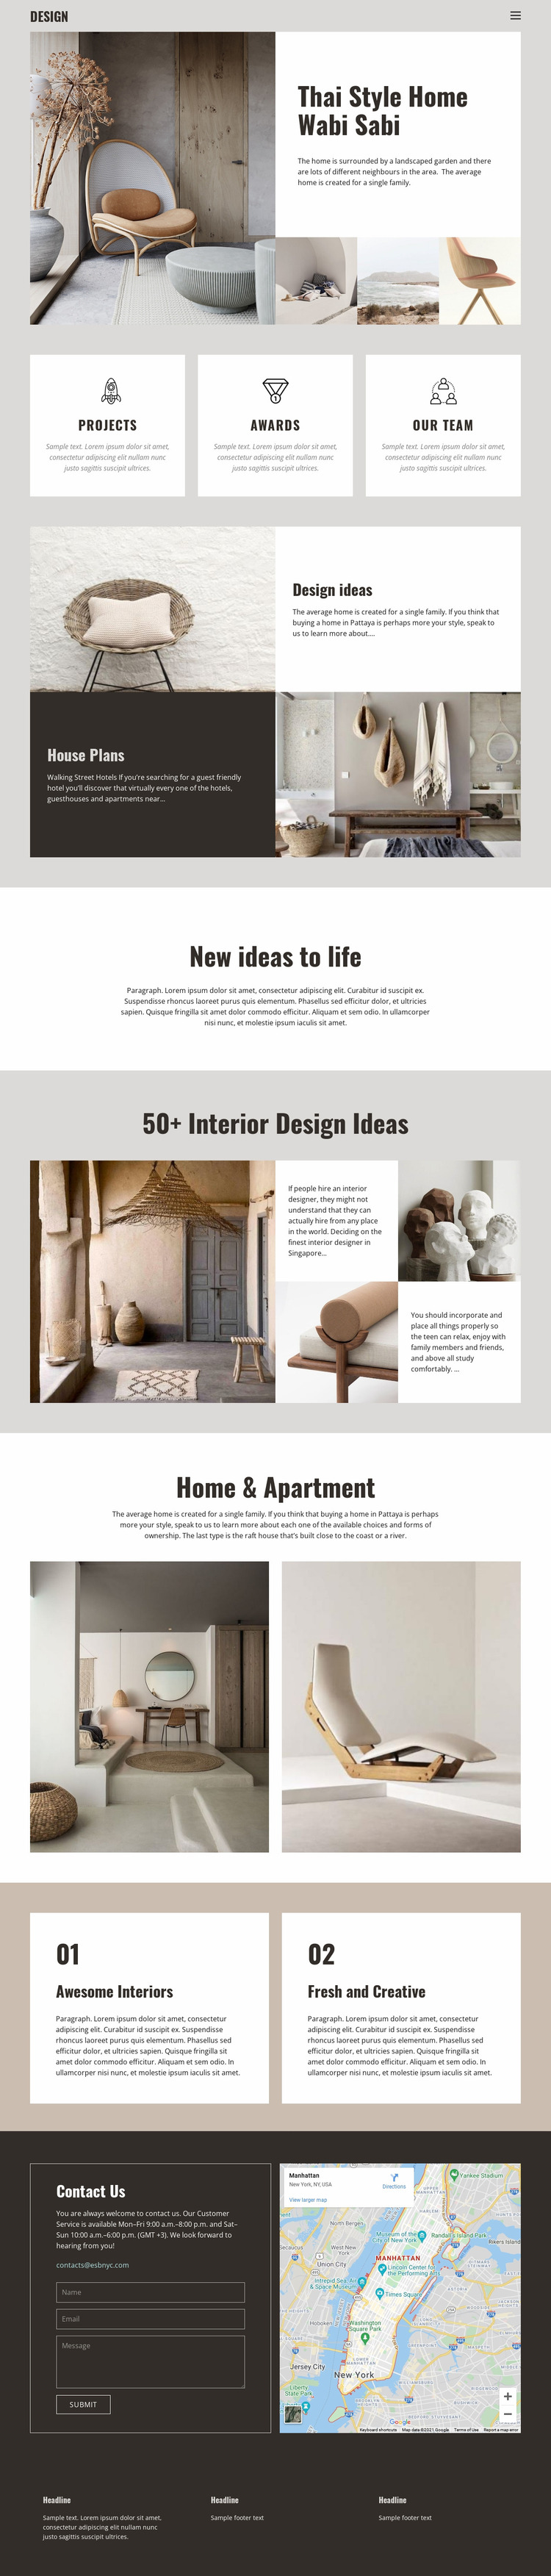 Thai style for home design Website Mockup